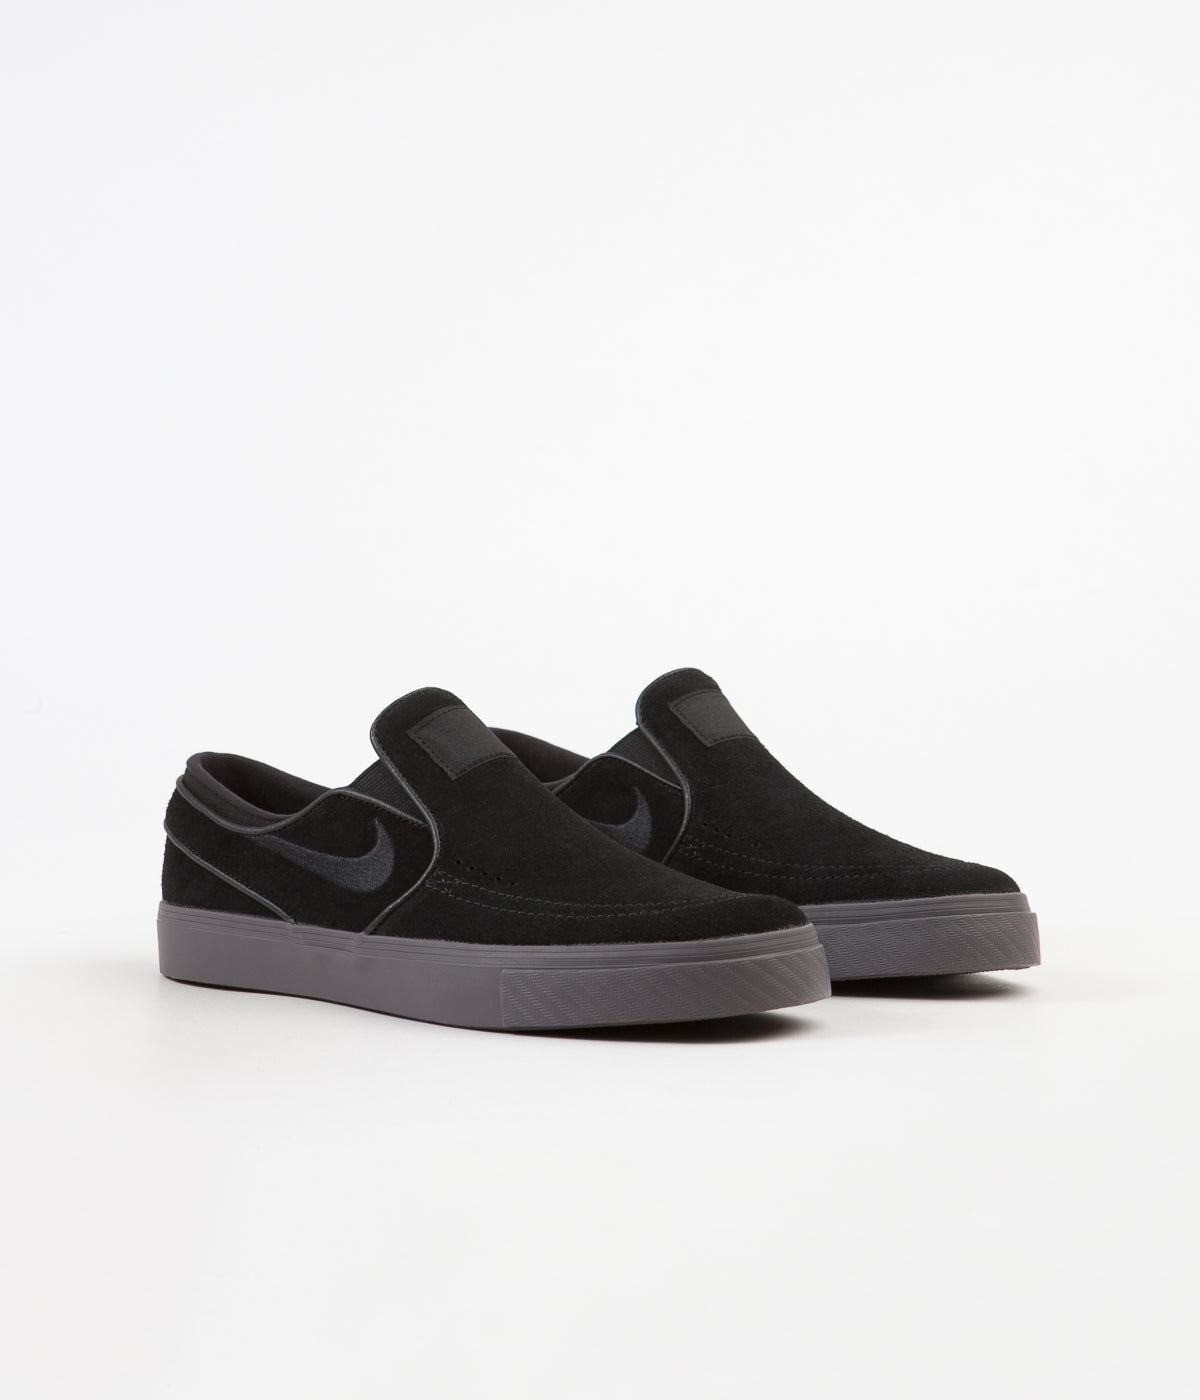 Nike SB Stefan Janoski Slip On Shoes - / Black - Grey |